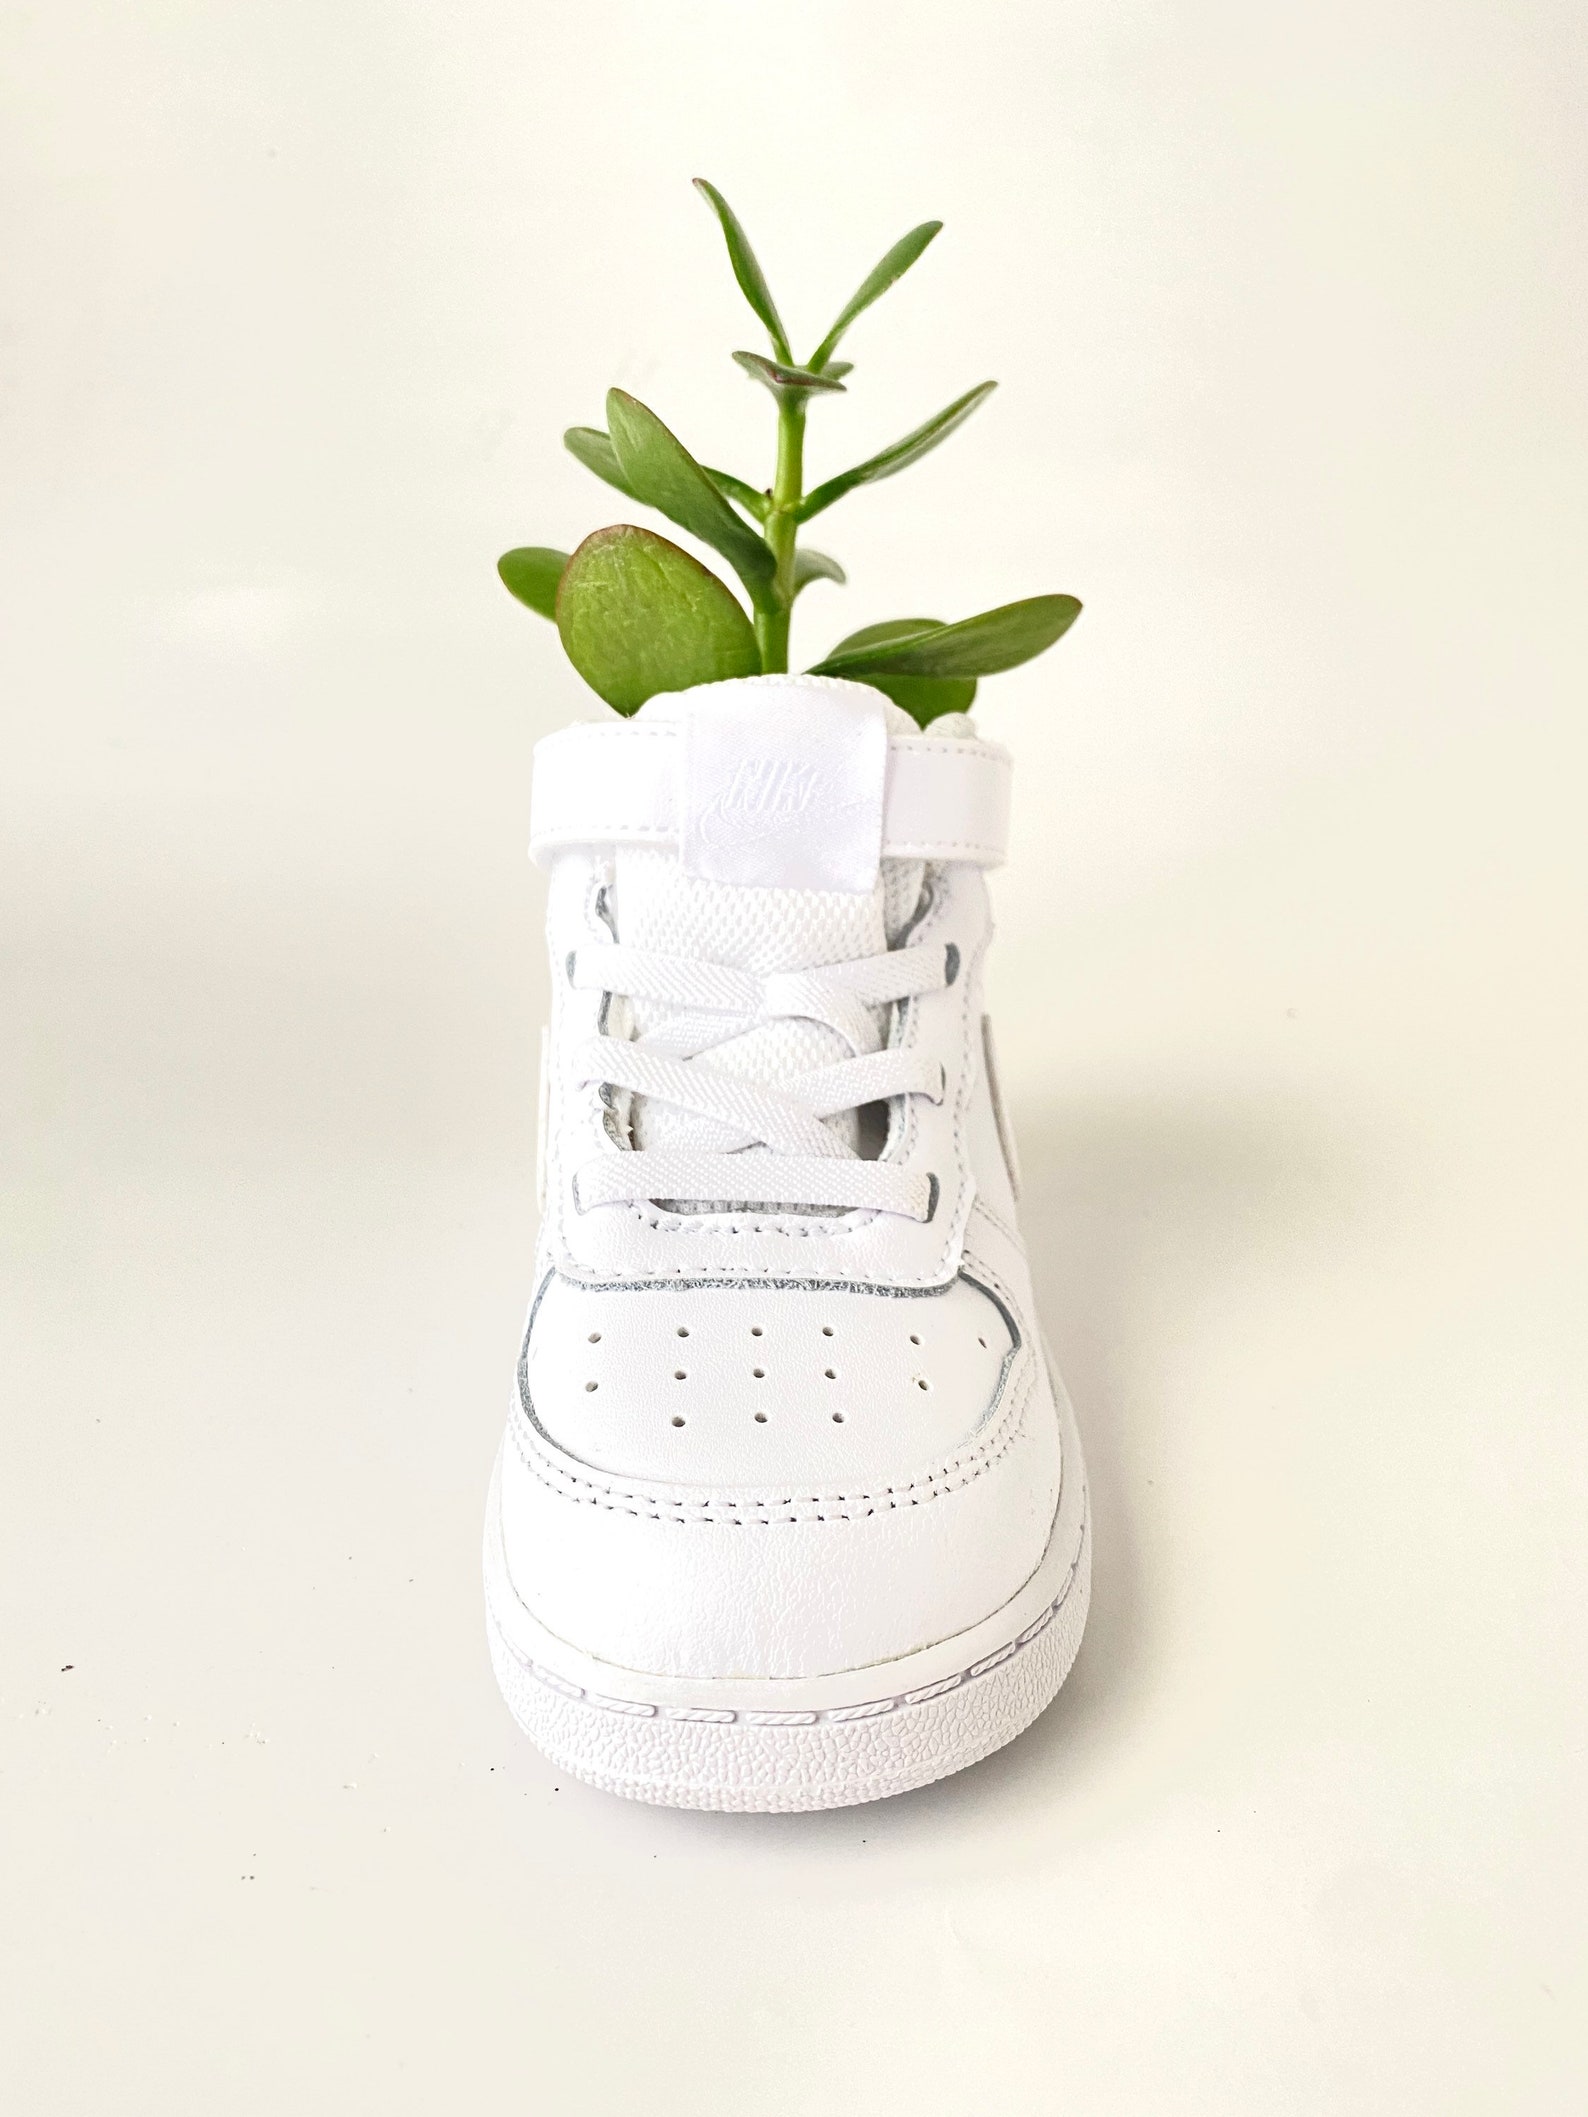 Nike Sneaker Planter by Plantsketball - Etsy